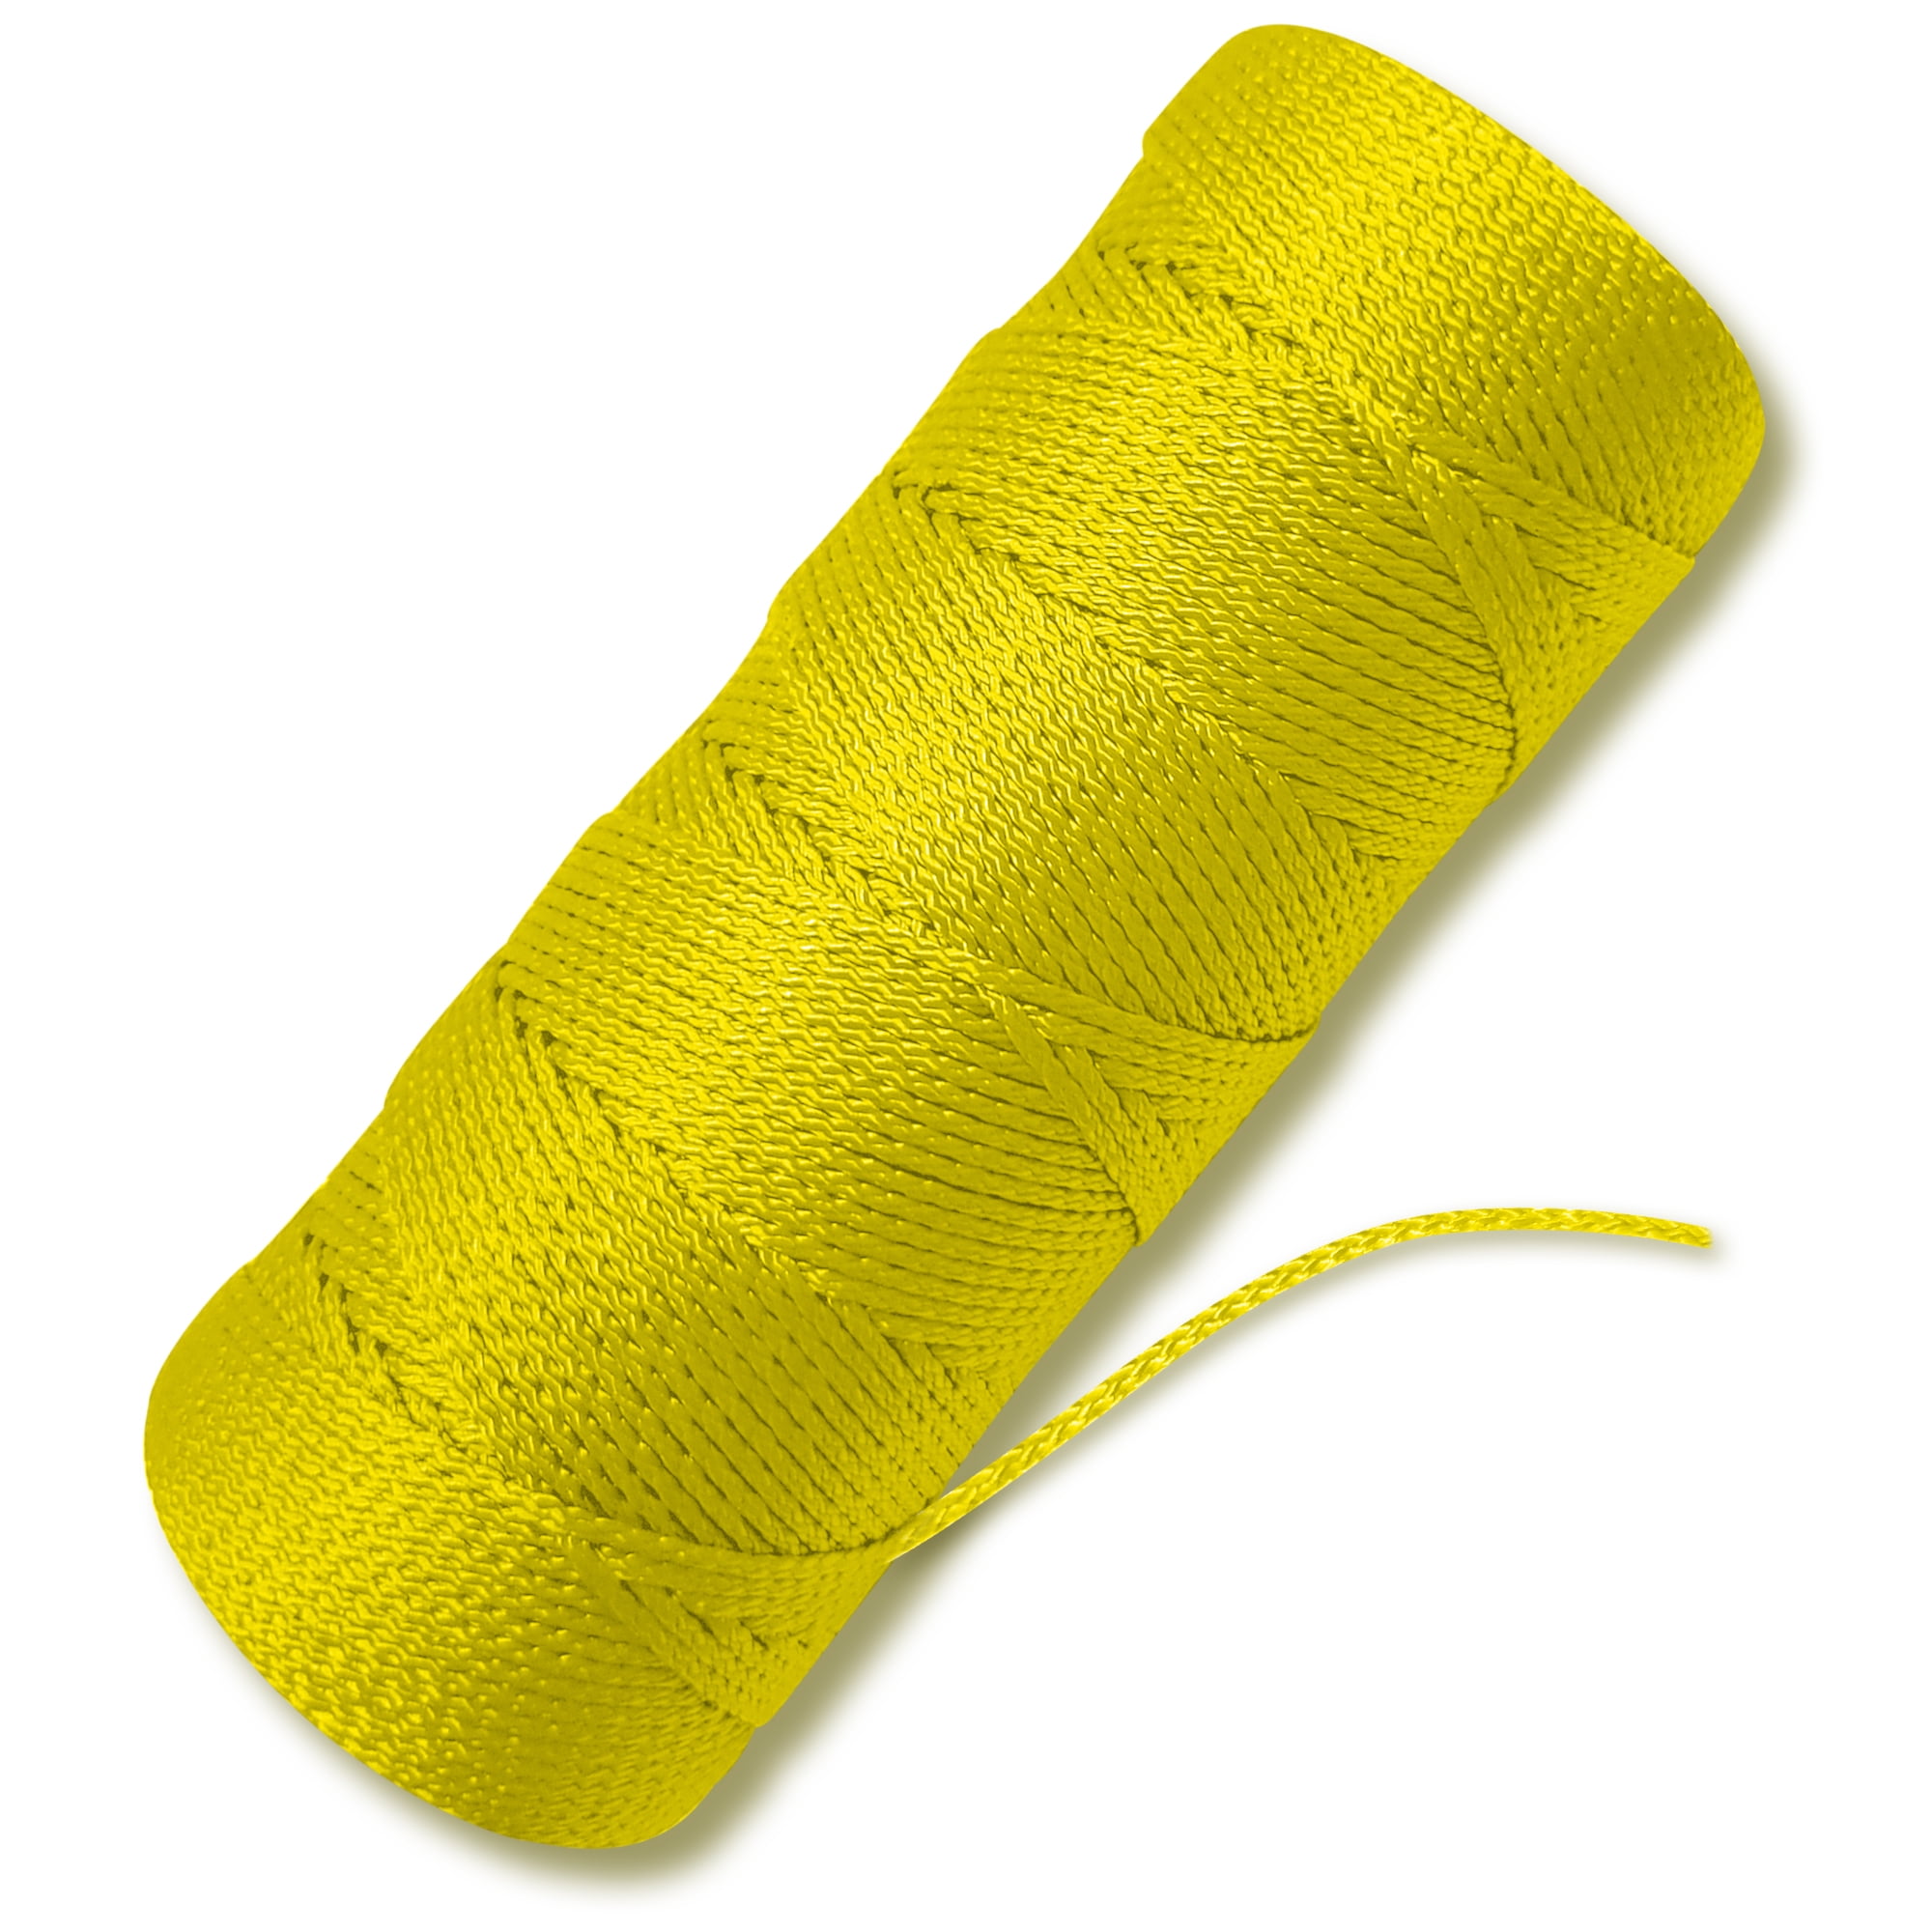 Shop Nylon String Craft online - Jan 2024